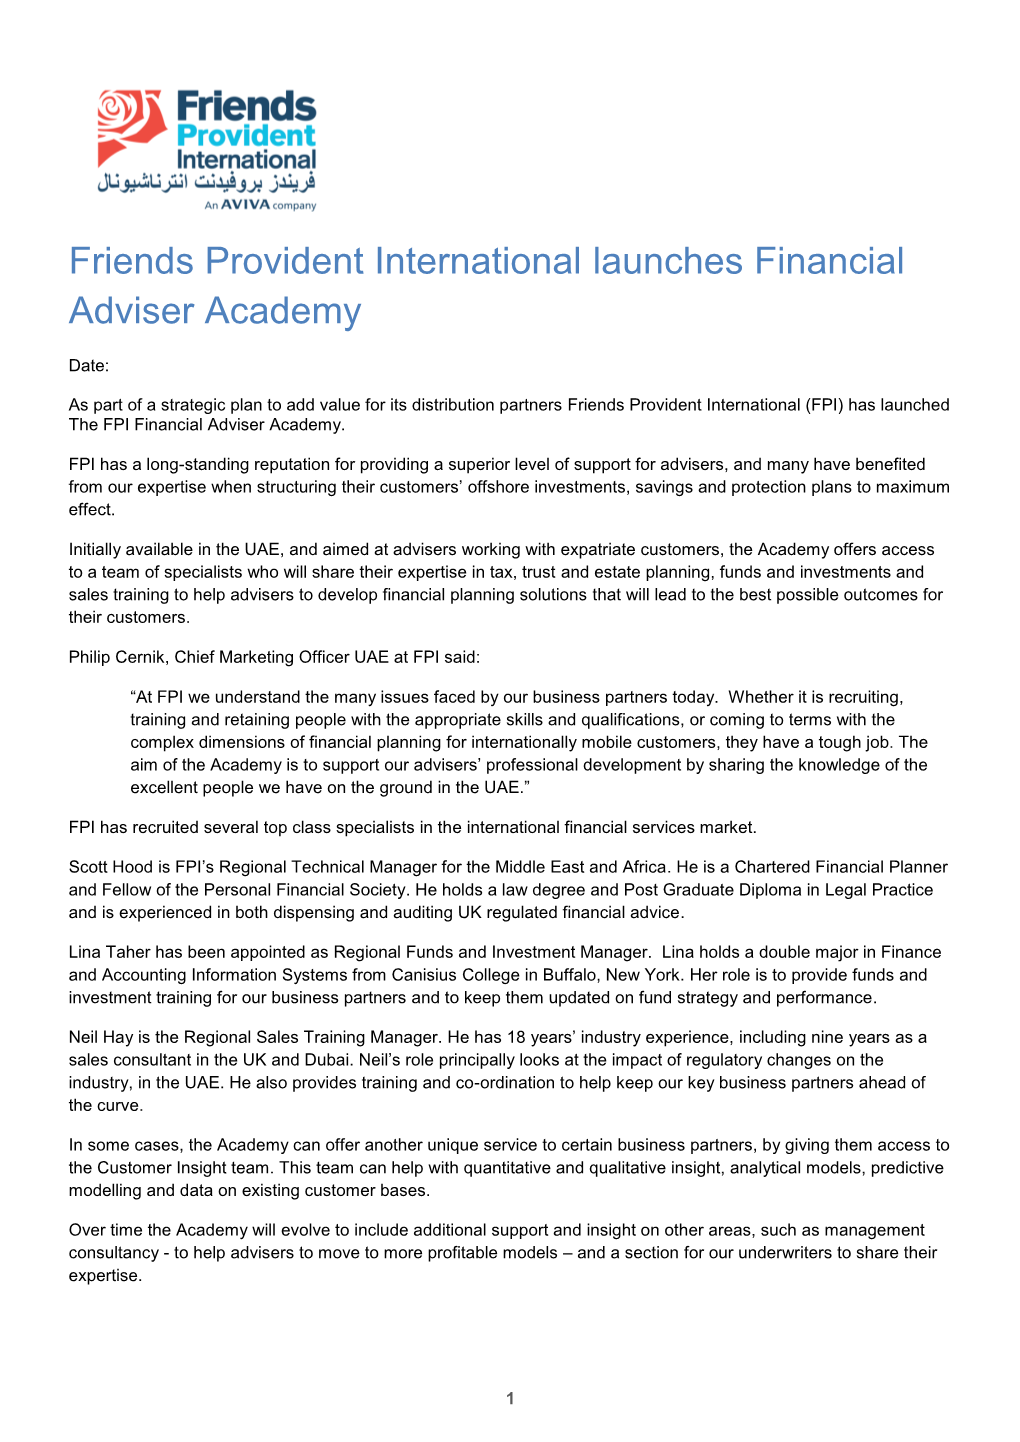 Friends Provident International Launches Financial Adviser Academy